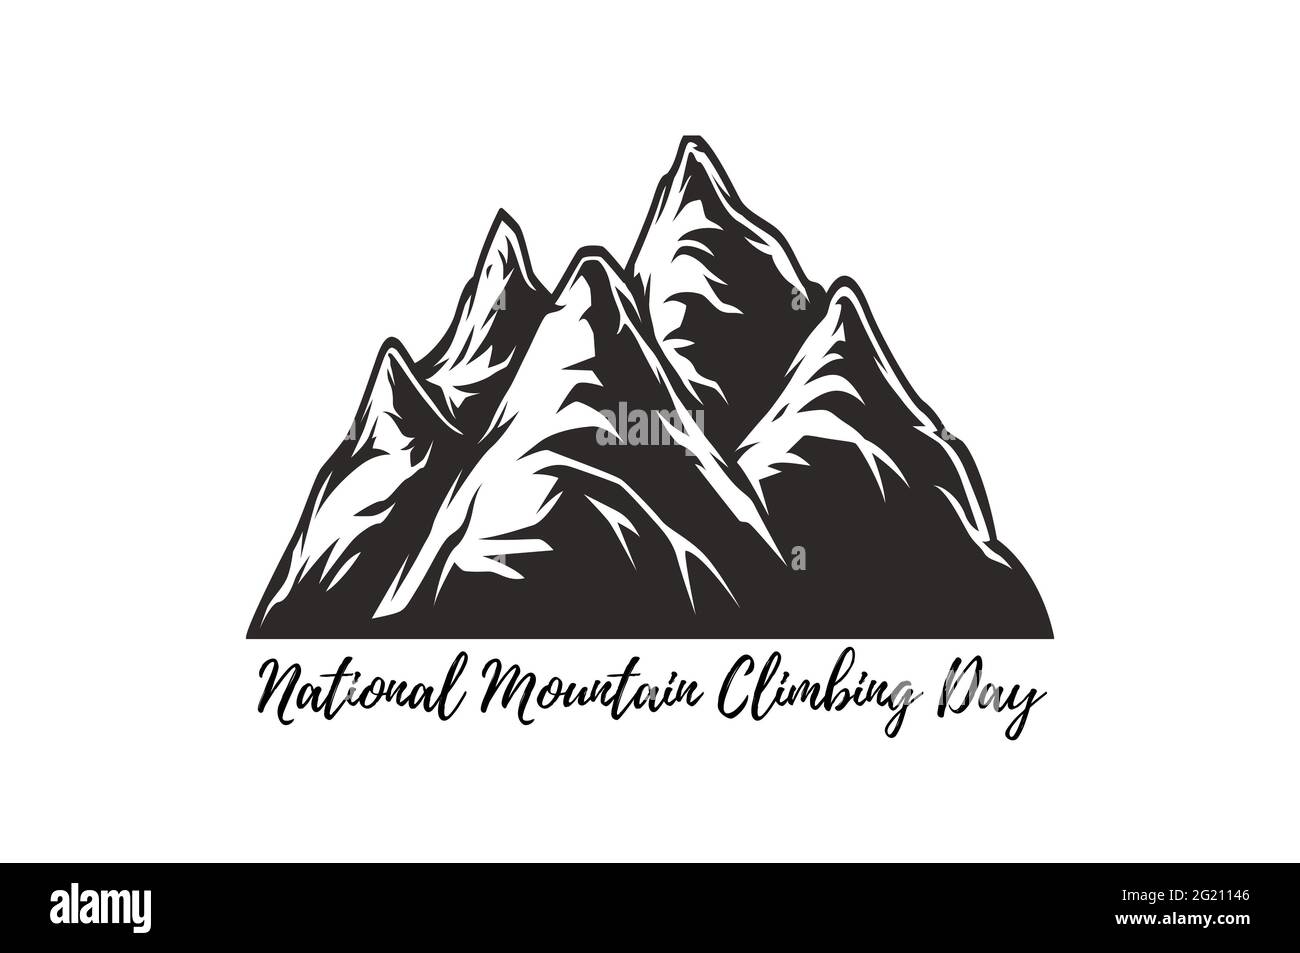 National Mountain Climbing Day Stock Photo